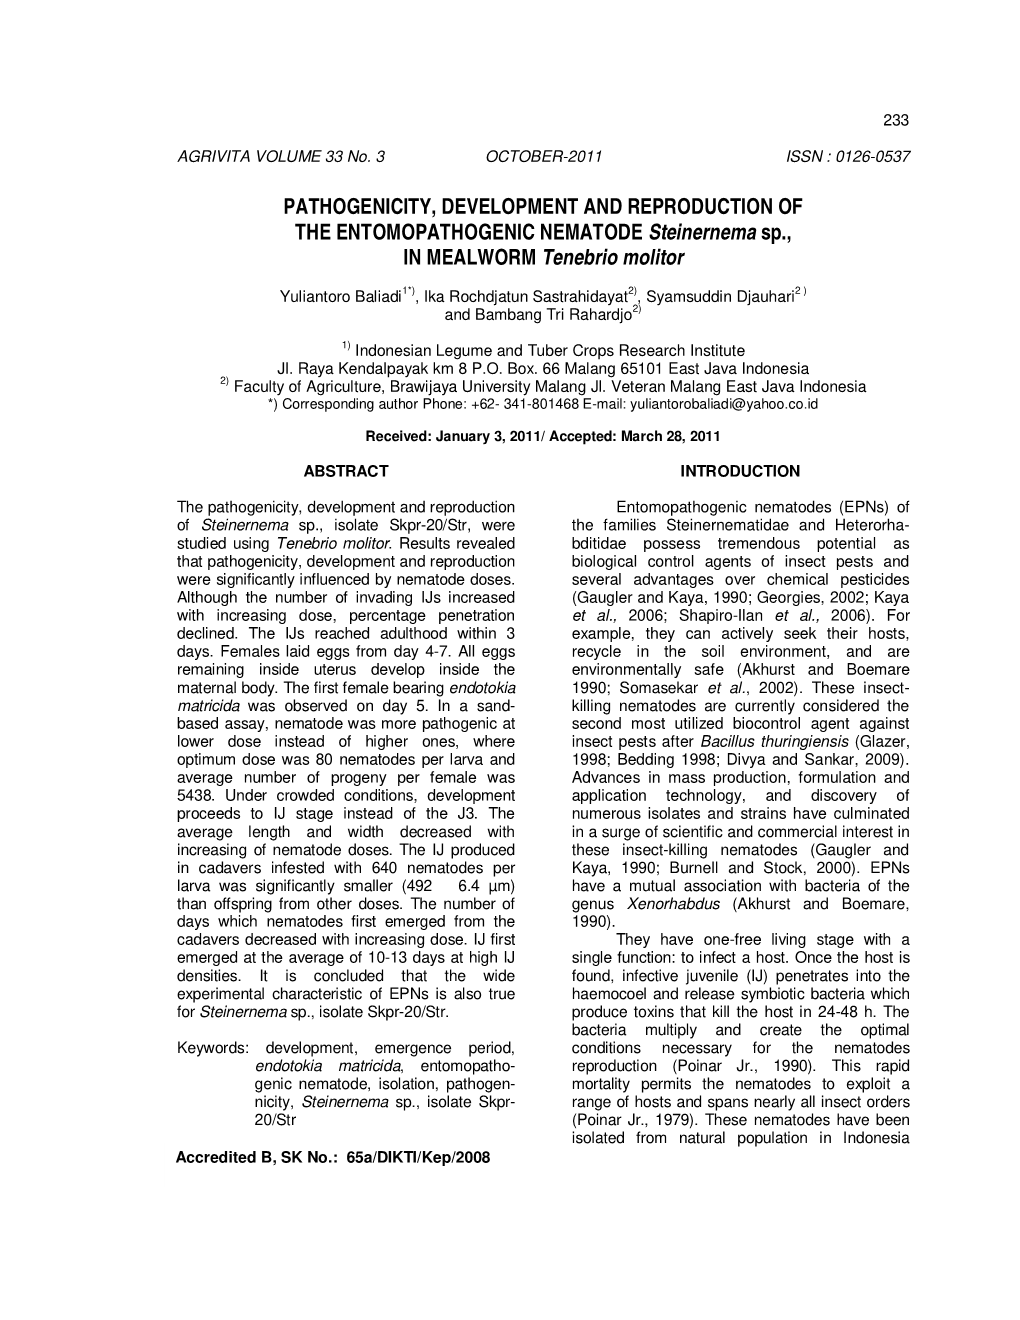 PATHOGENICITY, DEVELOPMENT and REPRODUCTION of the ENTOMOPATHOGENIC NEMATODE Steinernema Sp., in MEALWORM Tenebrio Molitor